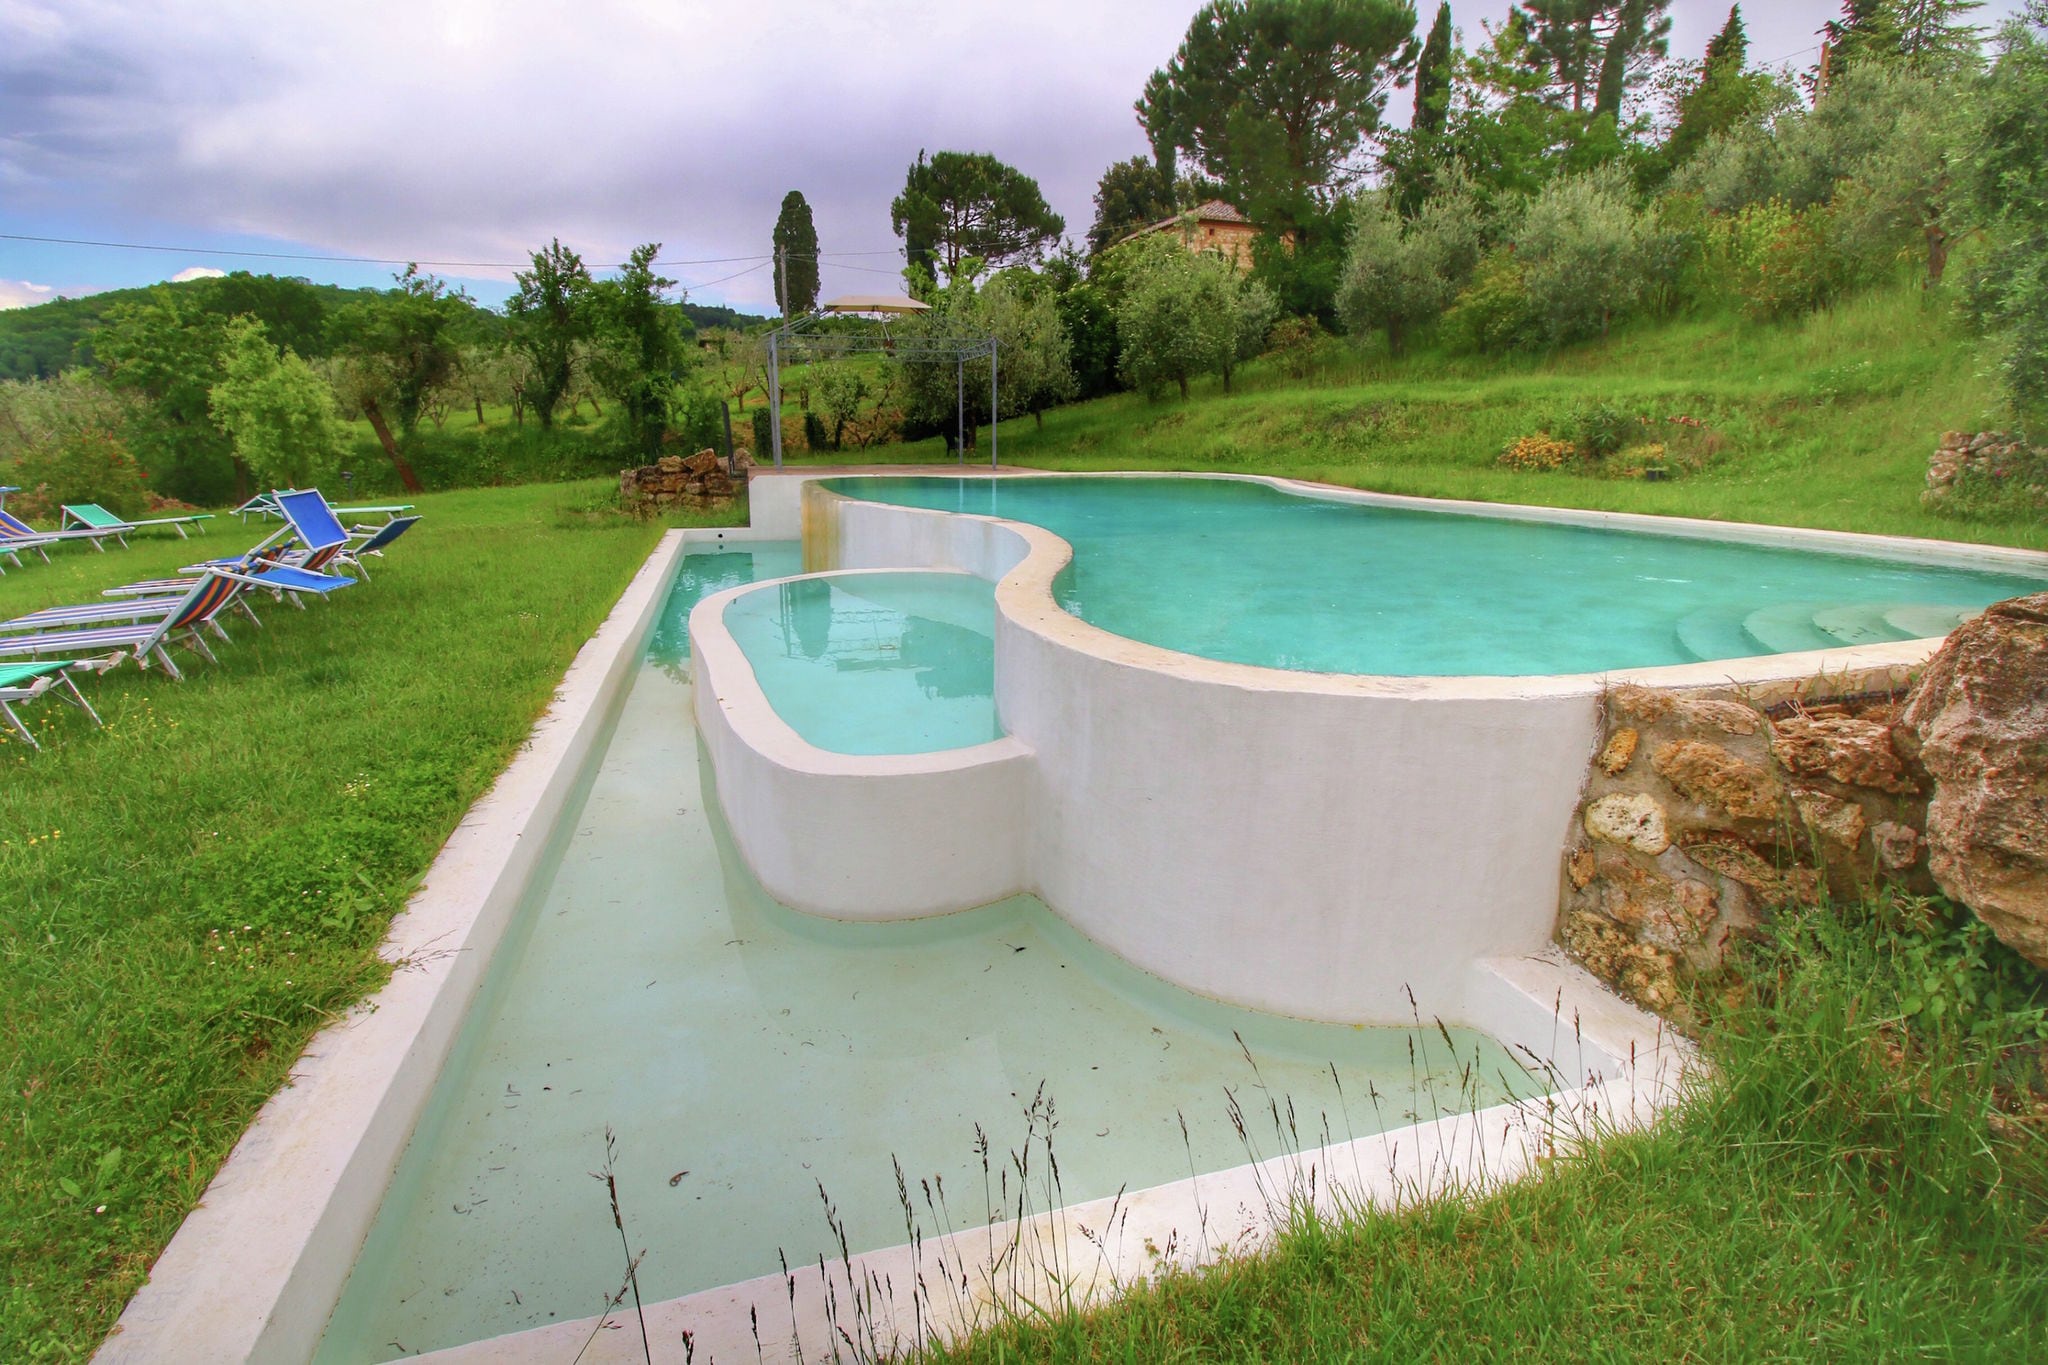 Rustic villa with private pool near Montepulciano, breathtaking views